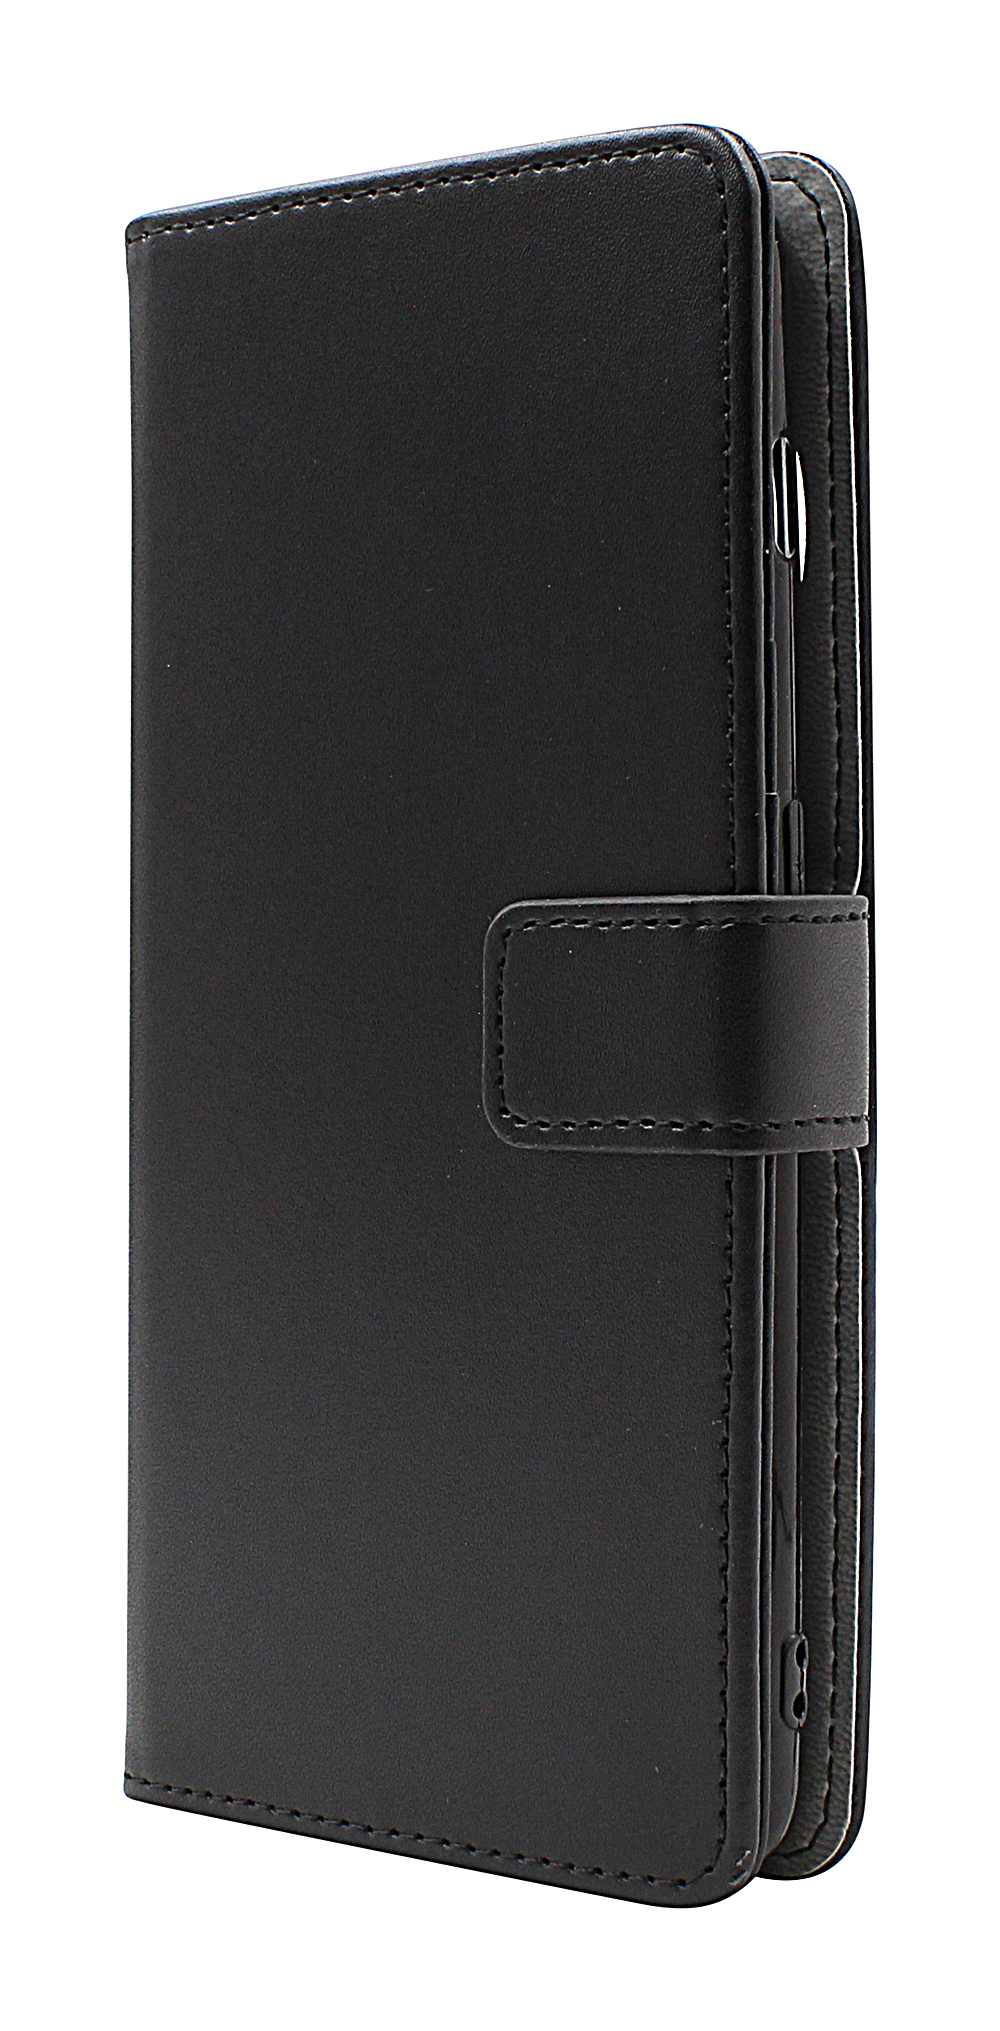 CoverInSkimblocker Magnet Fodral OnePlus 11 5G